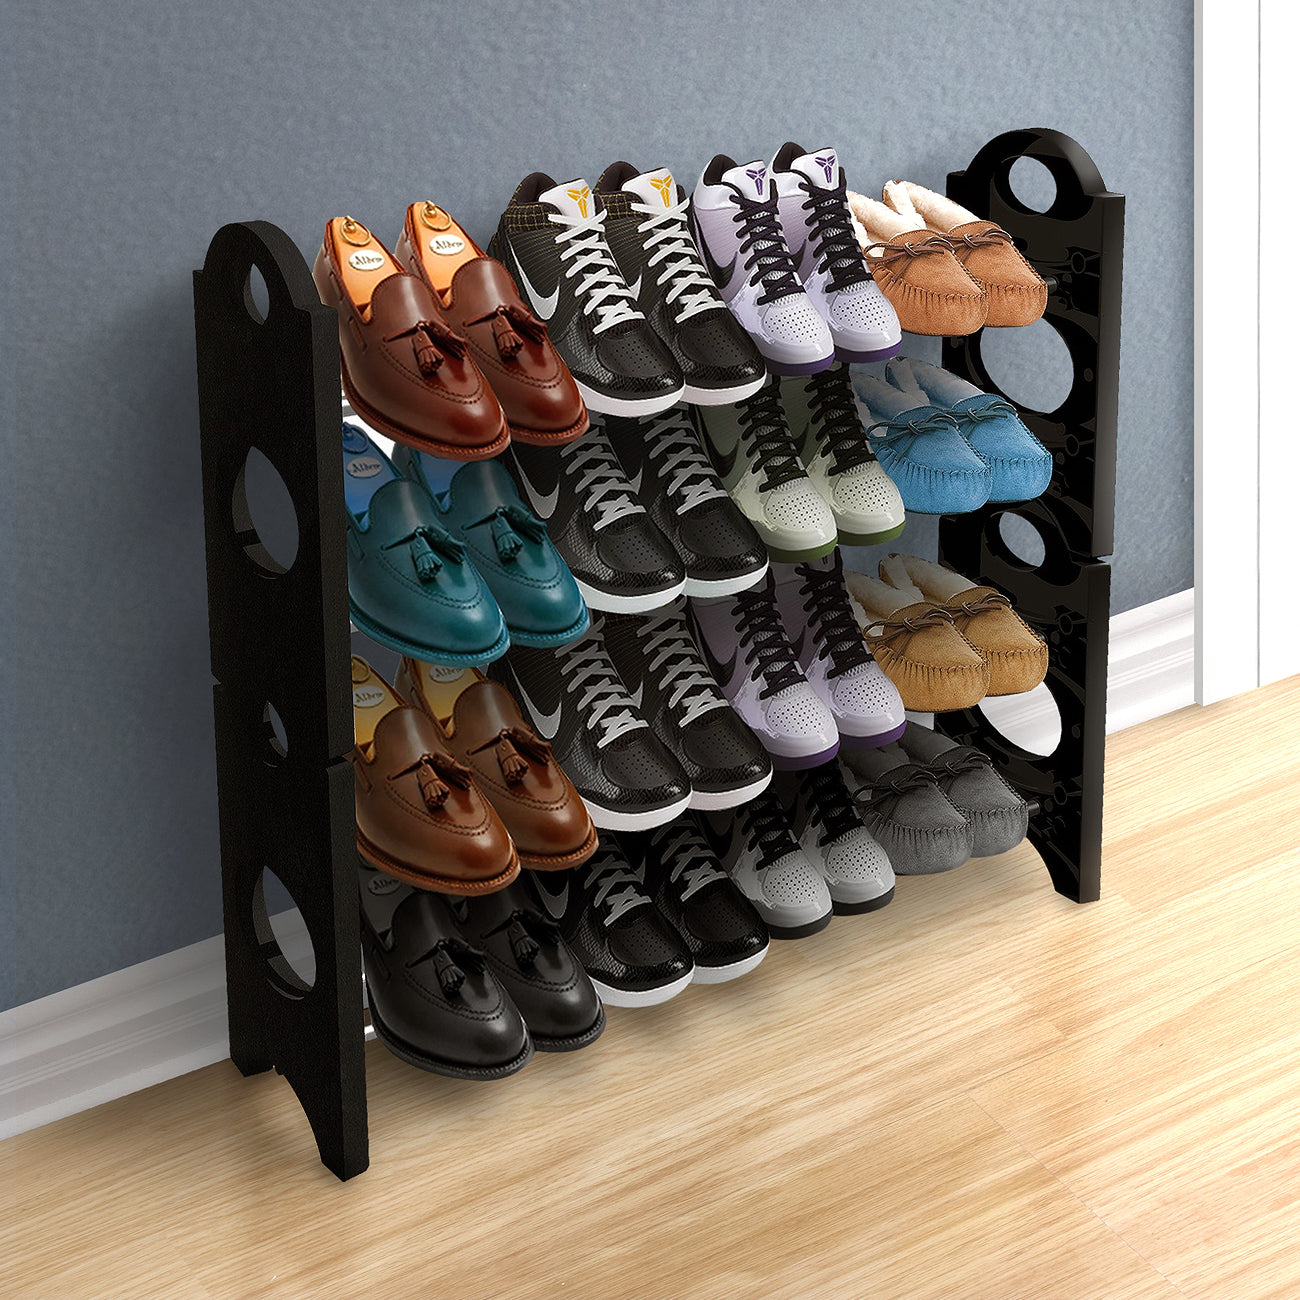 Shoe Rack Organizer Storage - Stackable and Detachable